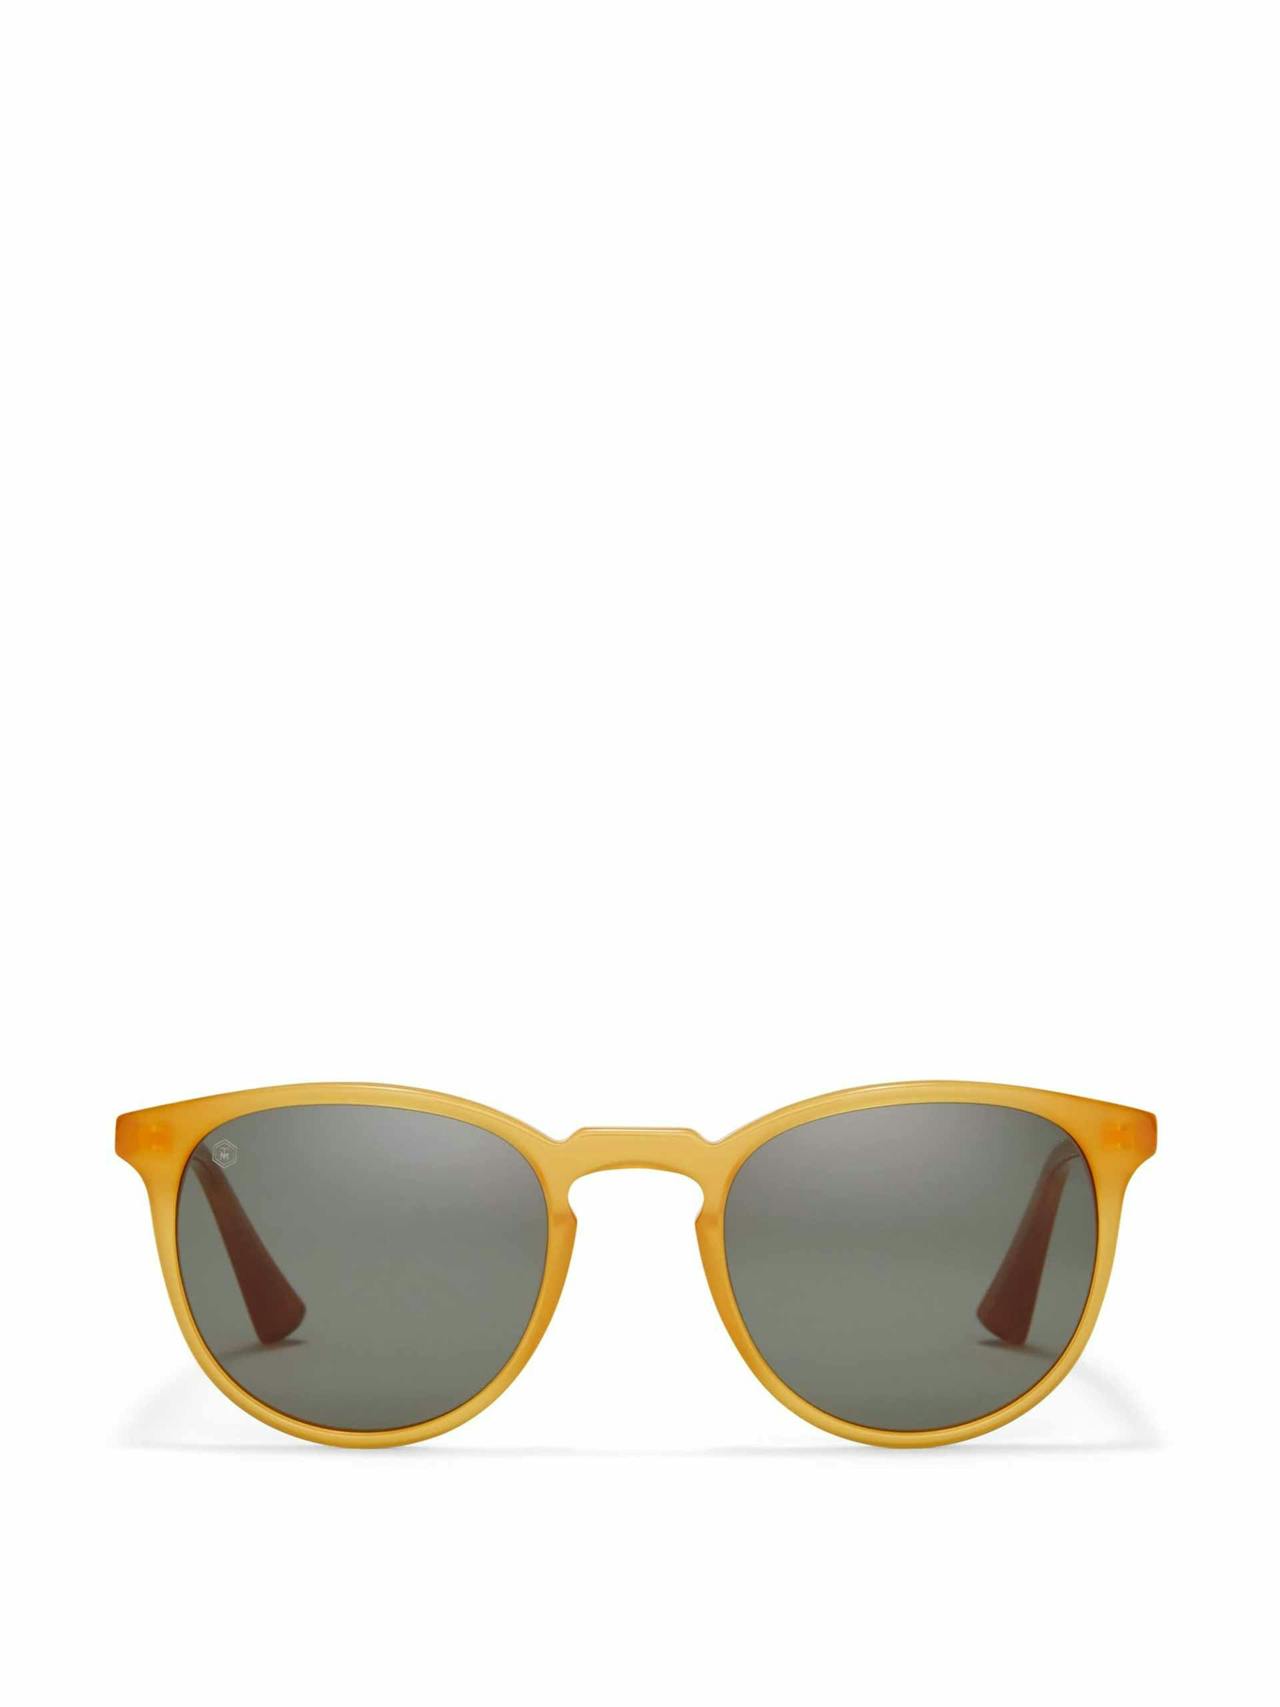 Yellow-framed round sunglasses